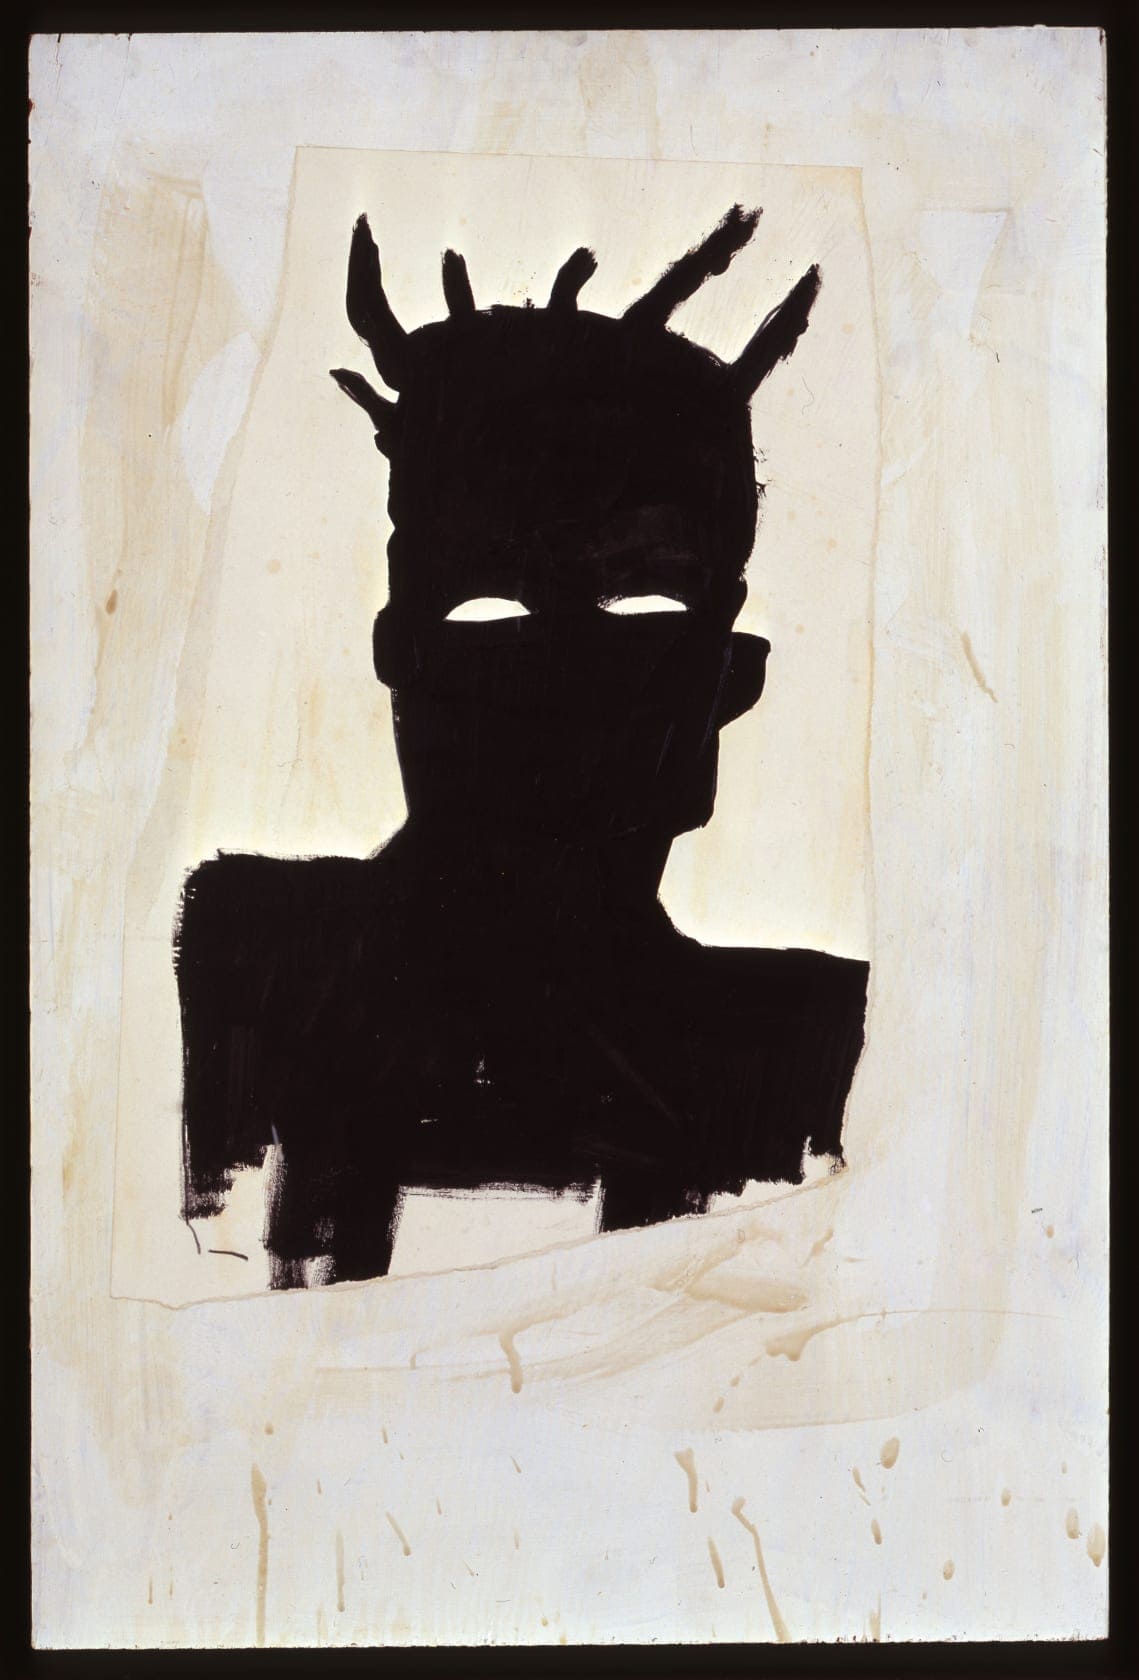 Self-portrait, Jean-Michel Basquiat